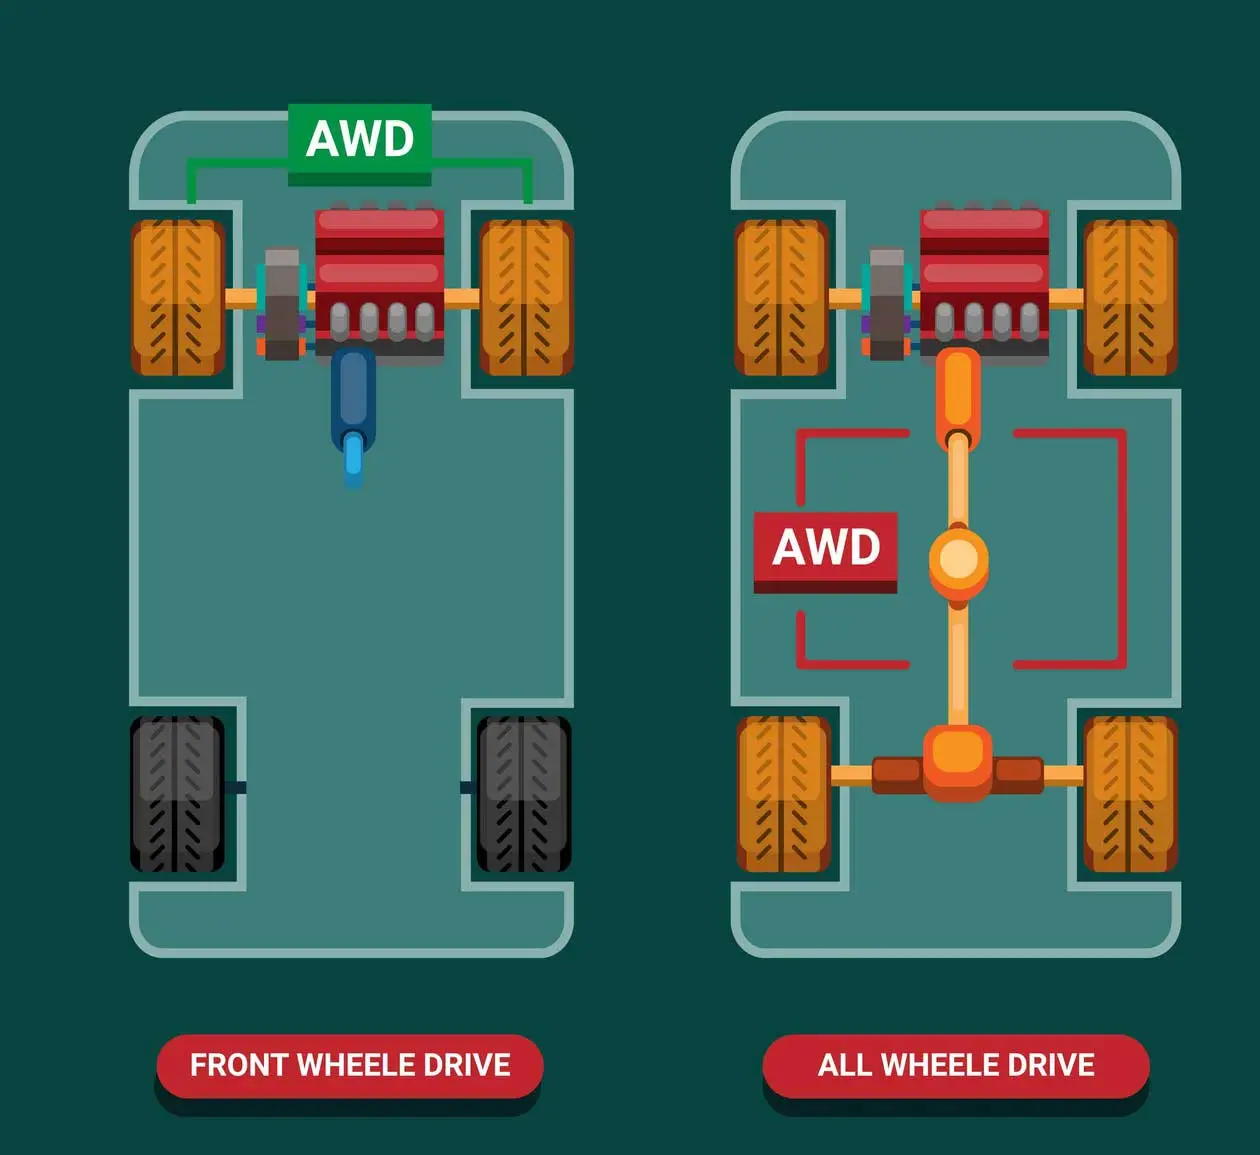 FWD vs AWD